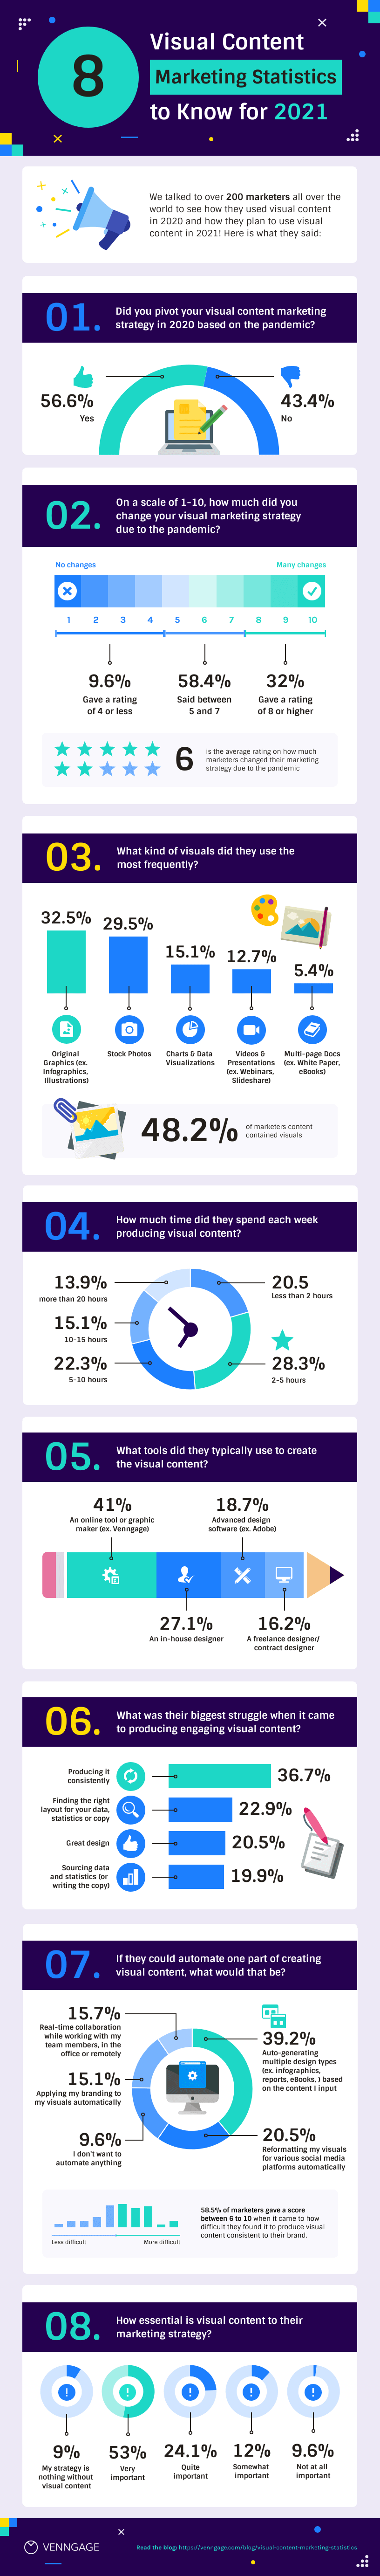 visual content marketing statistics 2021 infographic